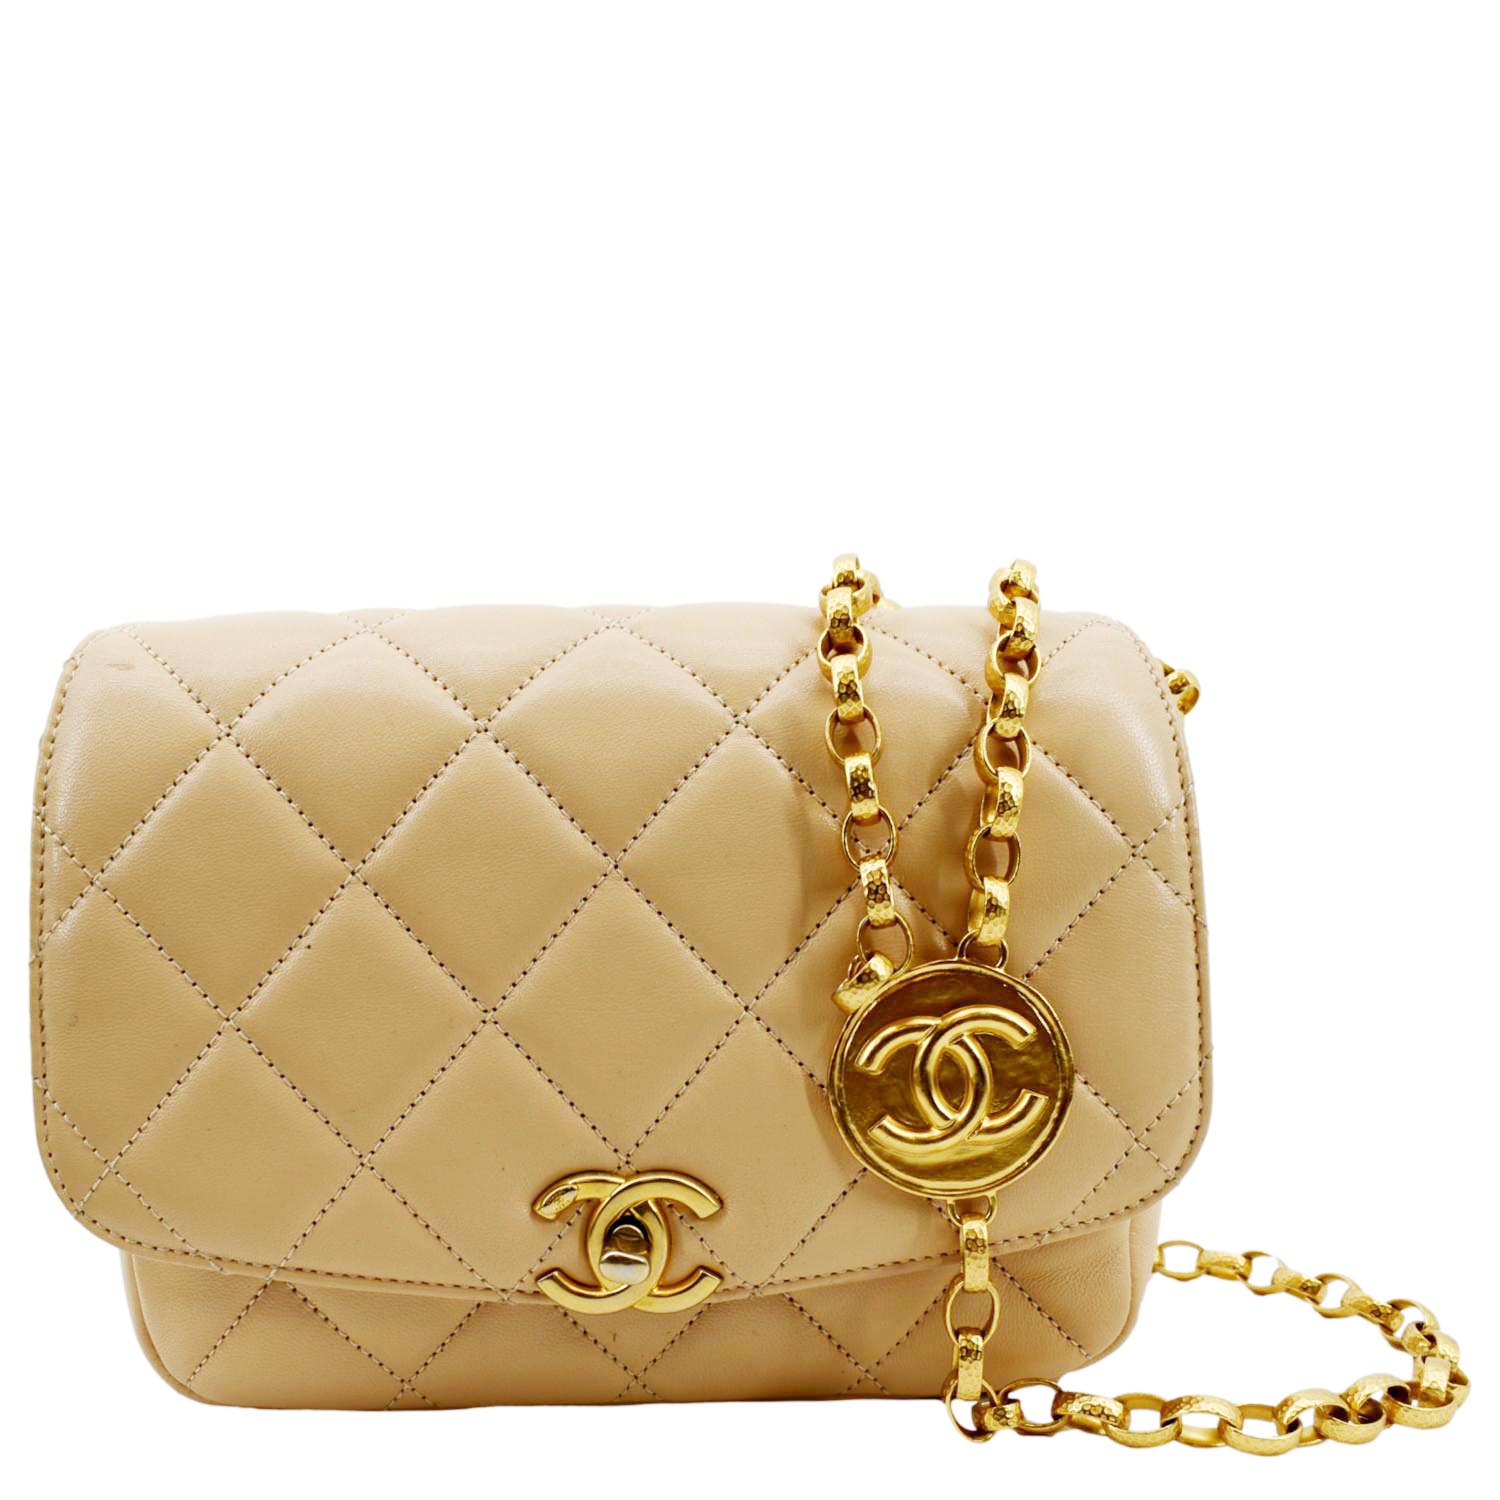 Sell Chanel Mini Lambskin Square Flap Bag - Beige